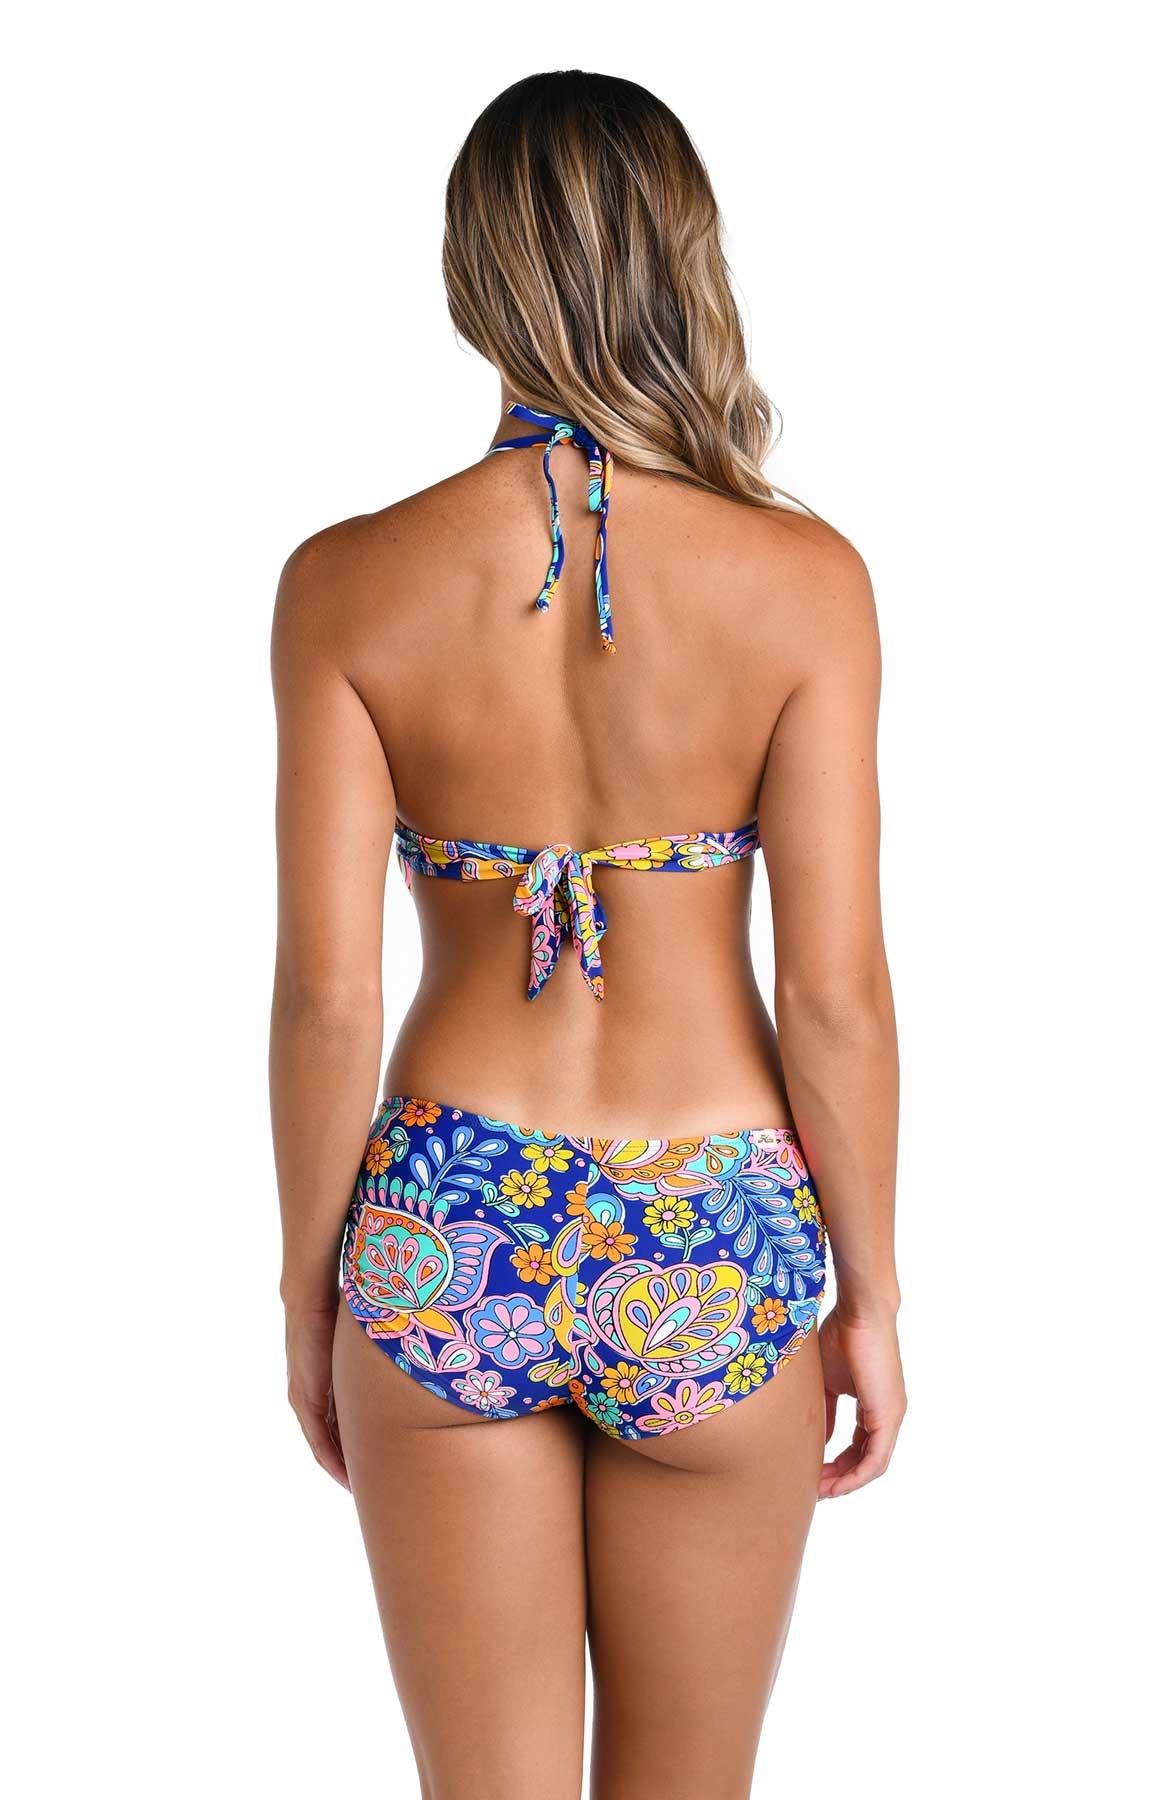 Clairette Zip-Up Swim Top in Calypso Bloom, Bikini